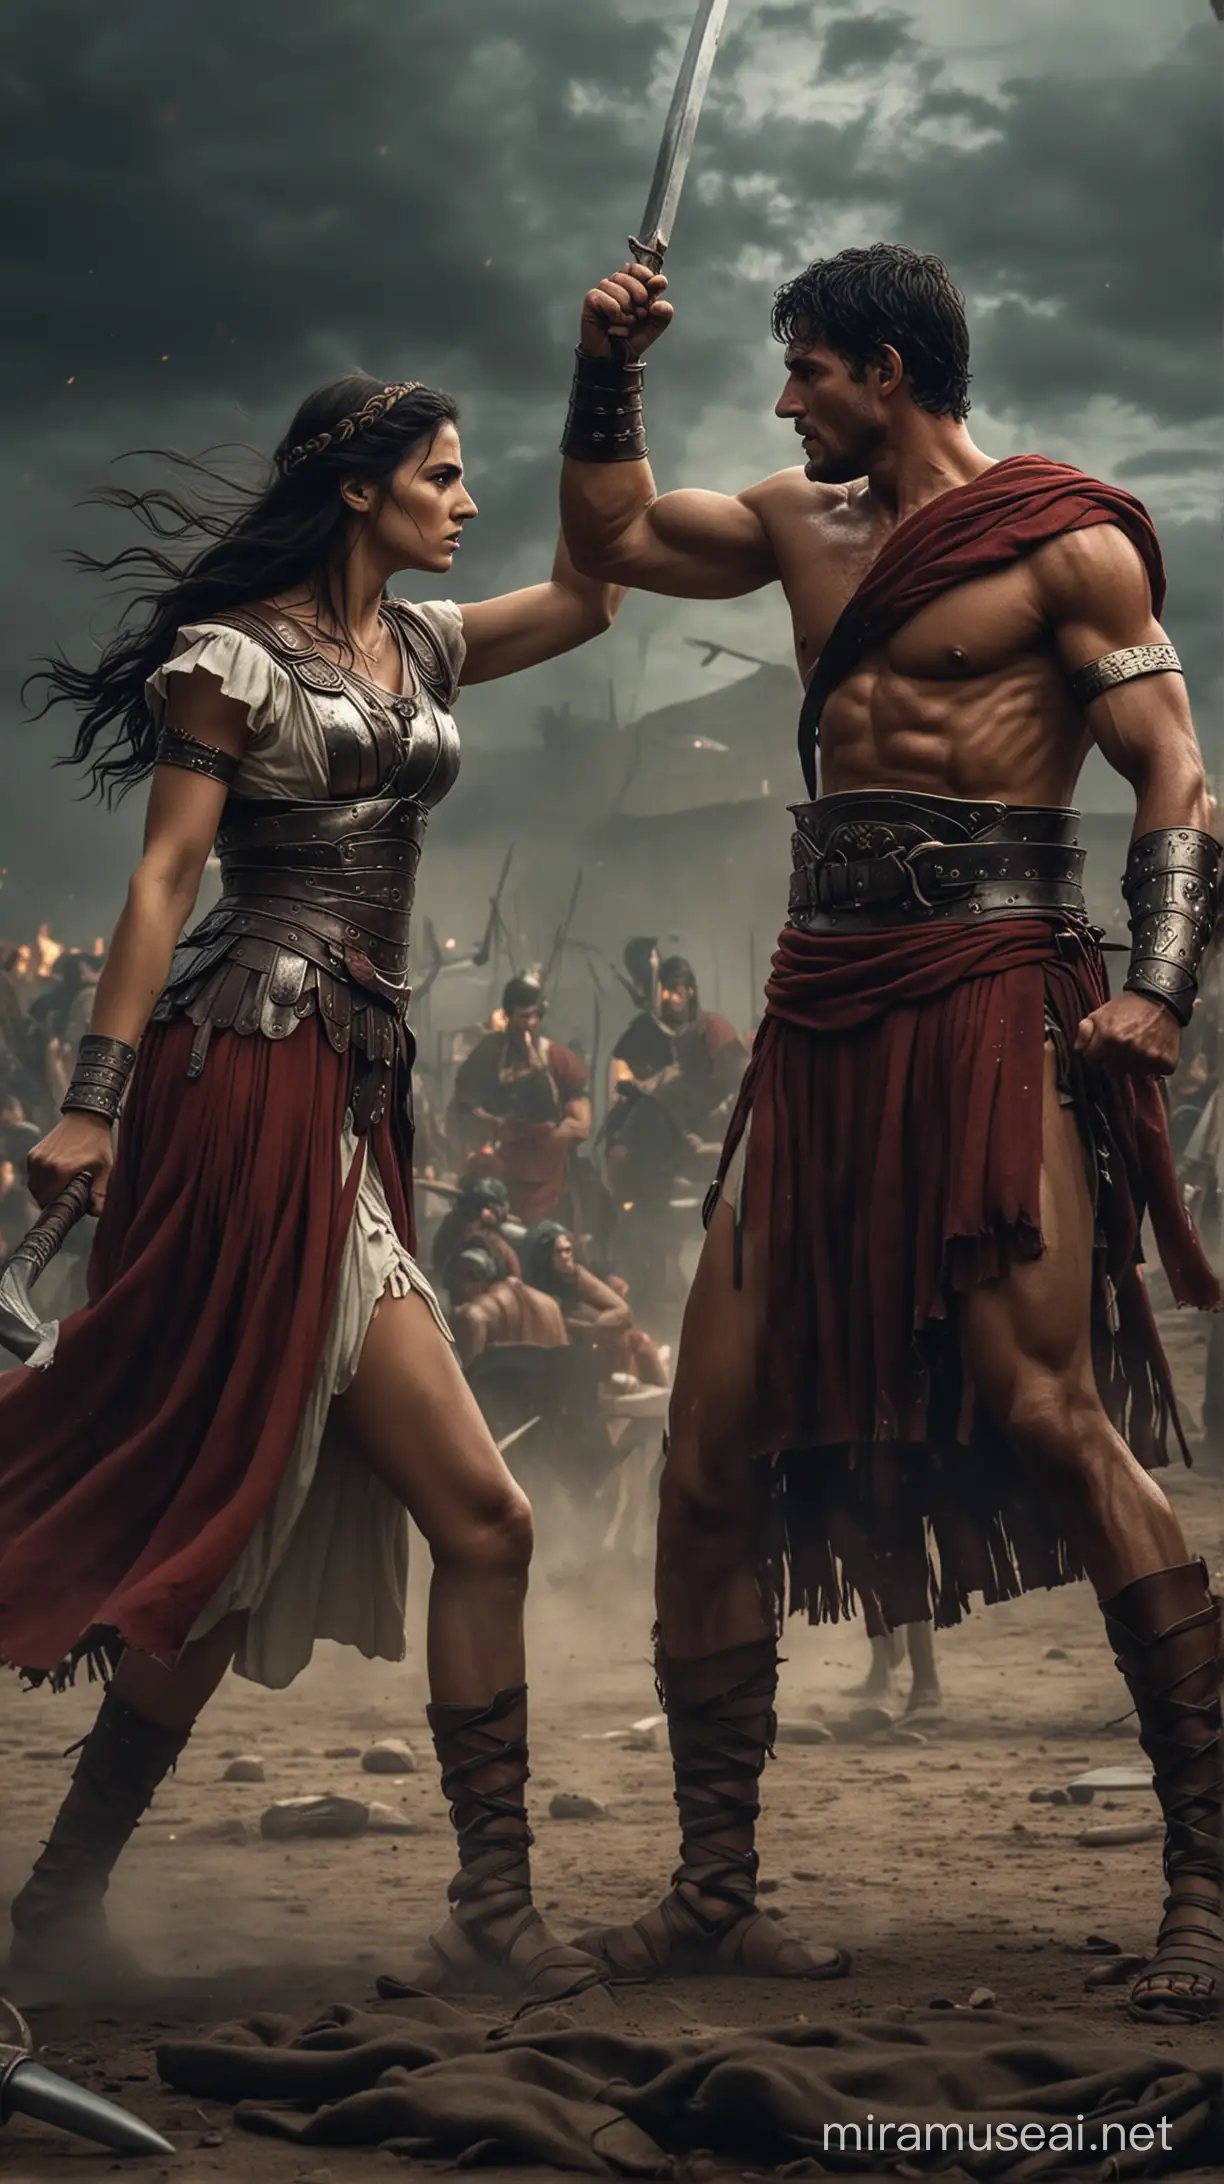 Intense Battle Scene Roman Octavia Confronts Mark Antony in Moody Setting